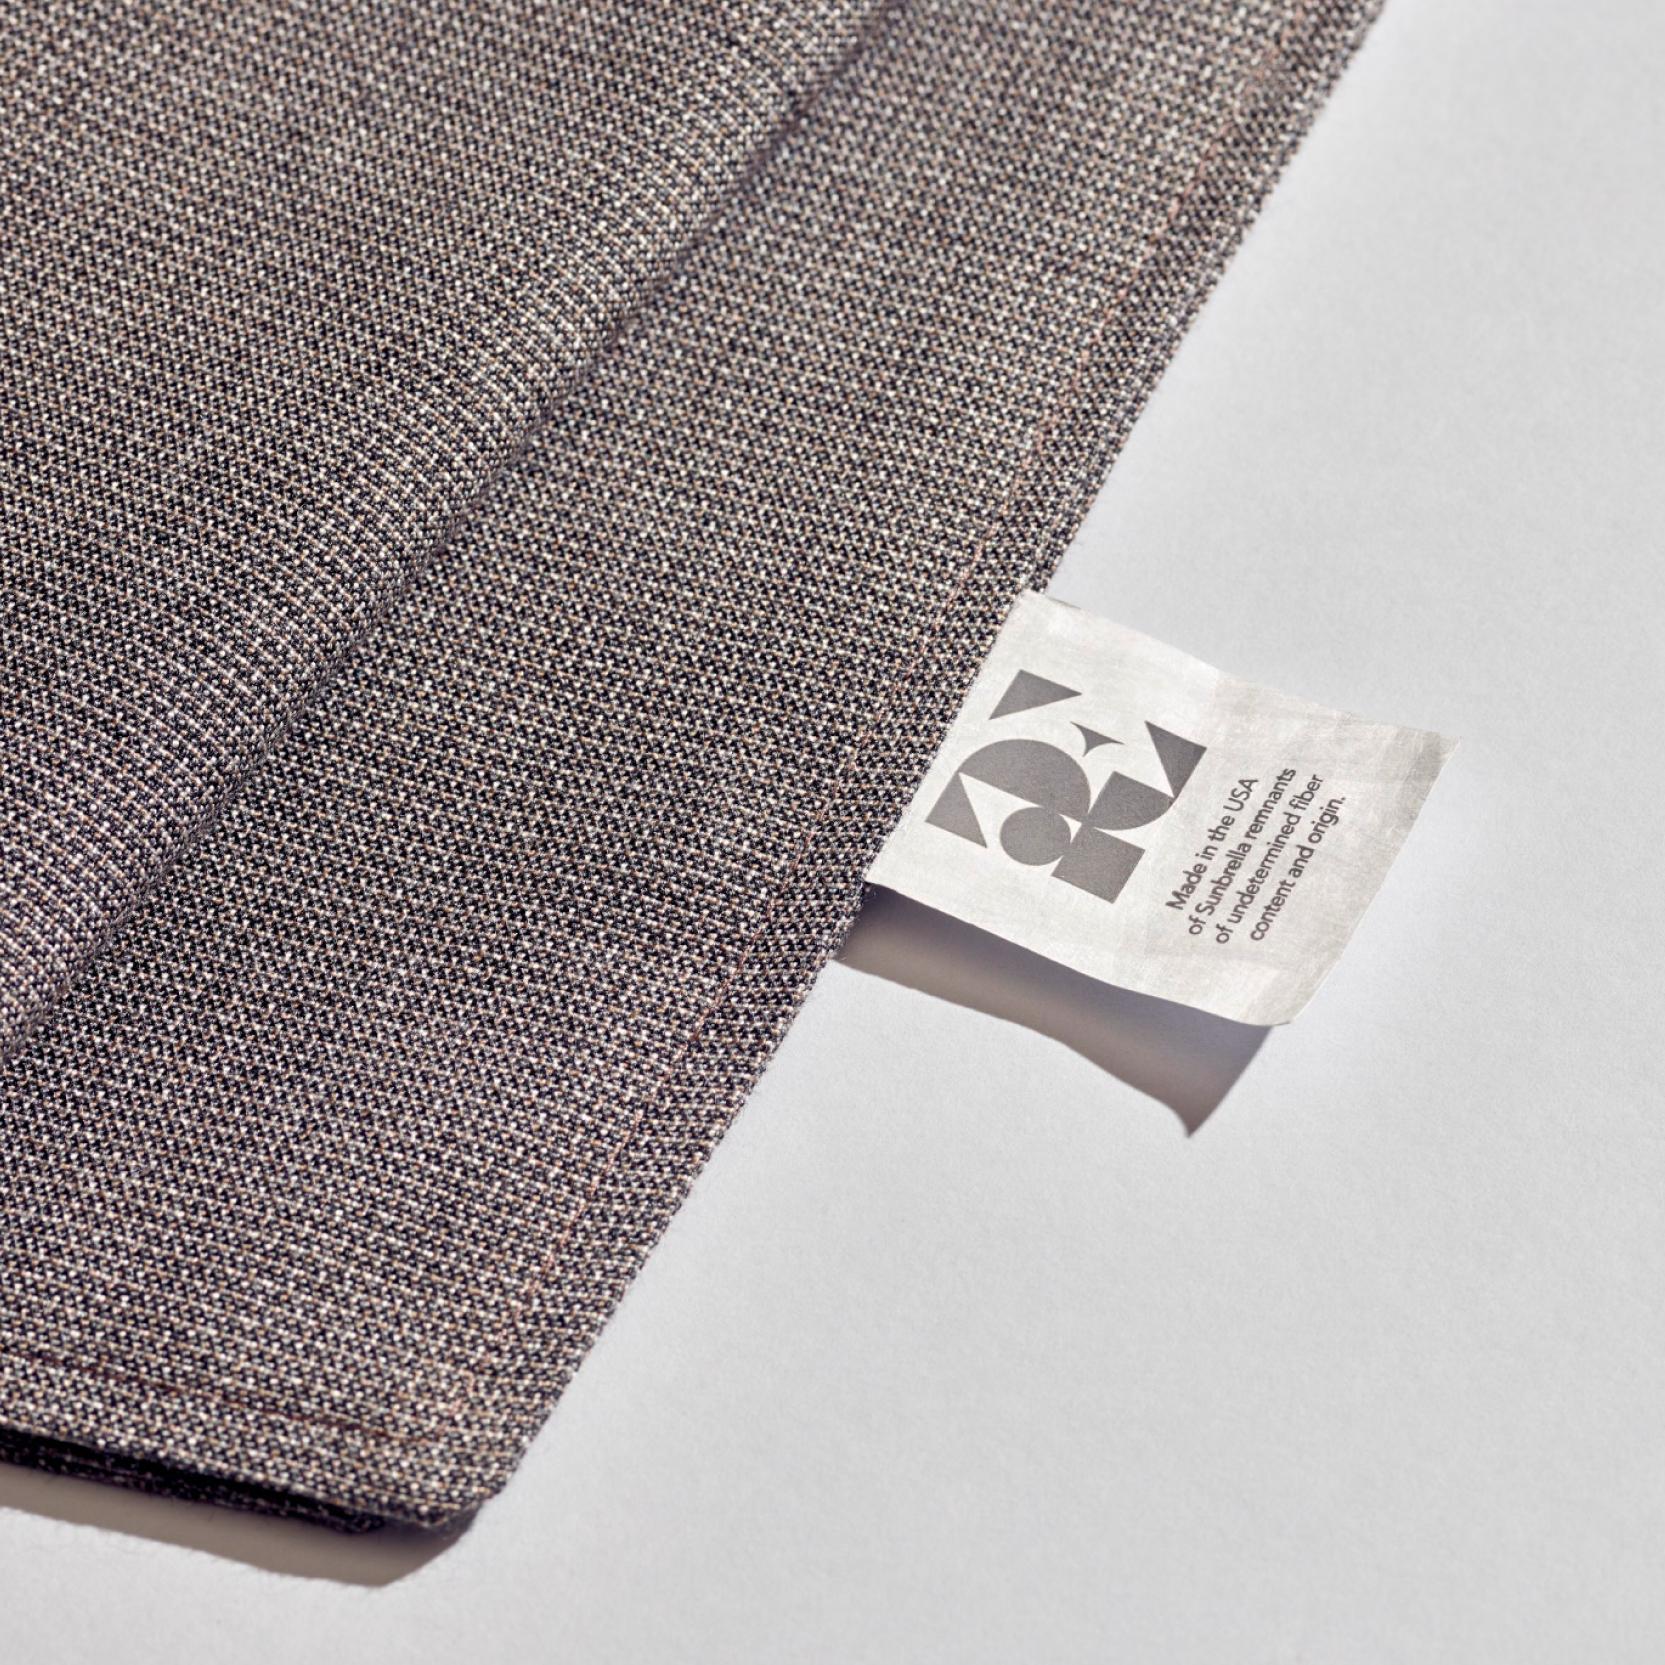 Sunbrella printed fabric label